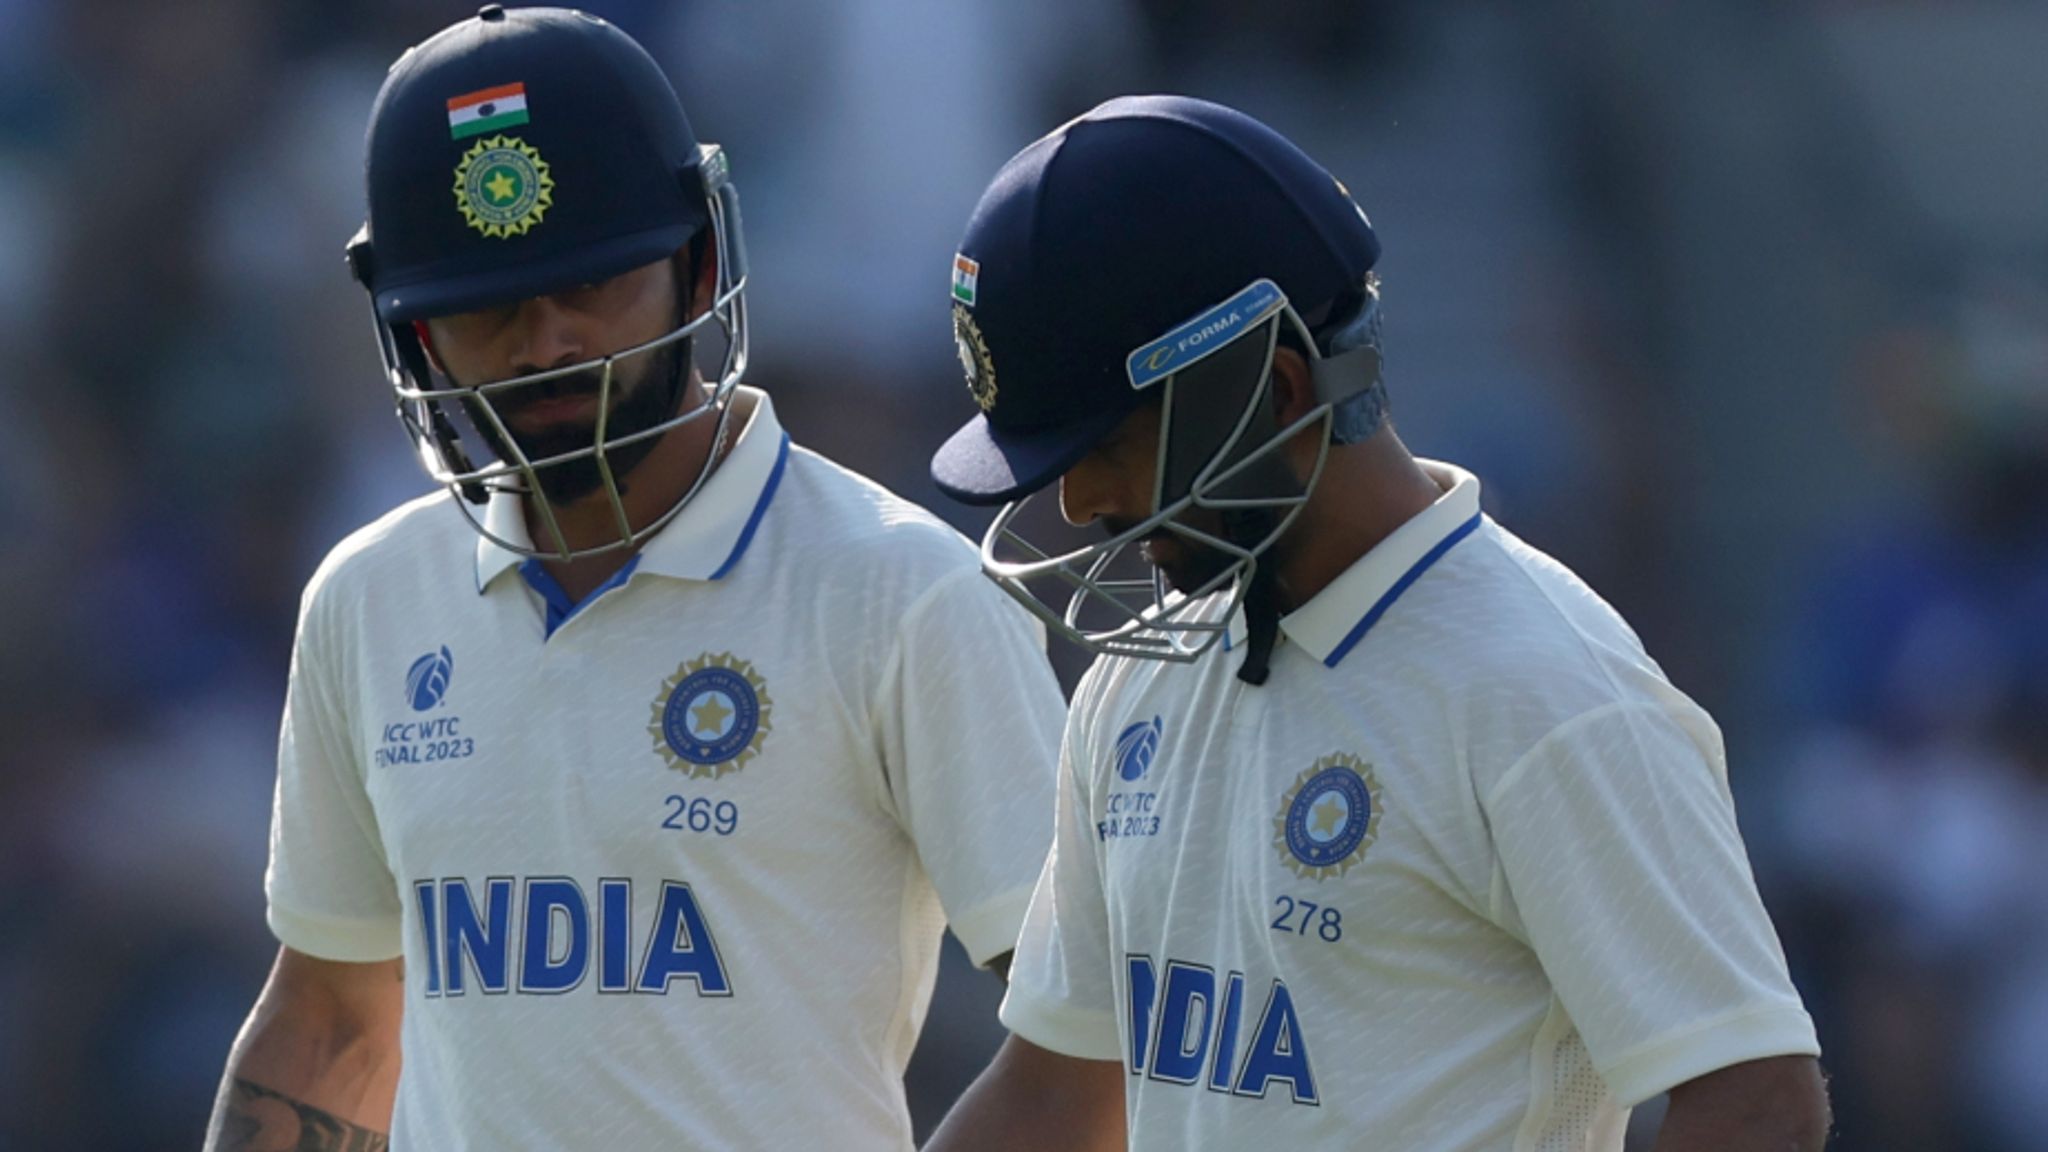 Virat Kohli, Cheteshwar Pujara, Ajinkya Rahane and other Indian cricketers  reveal jersey numbers on new Test kit